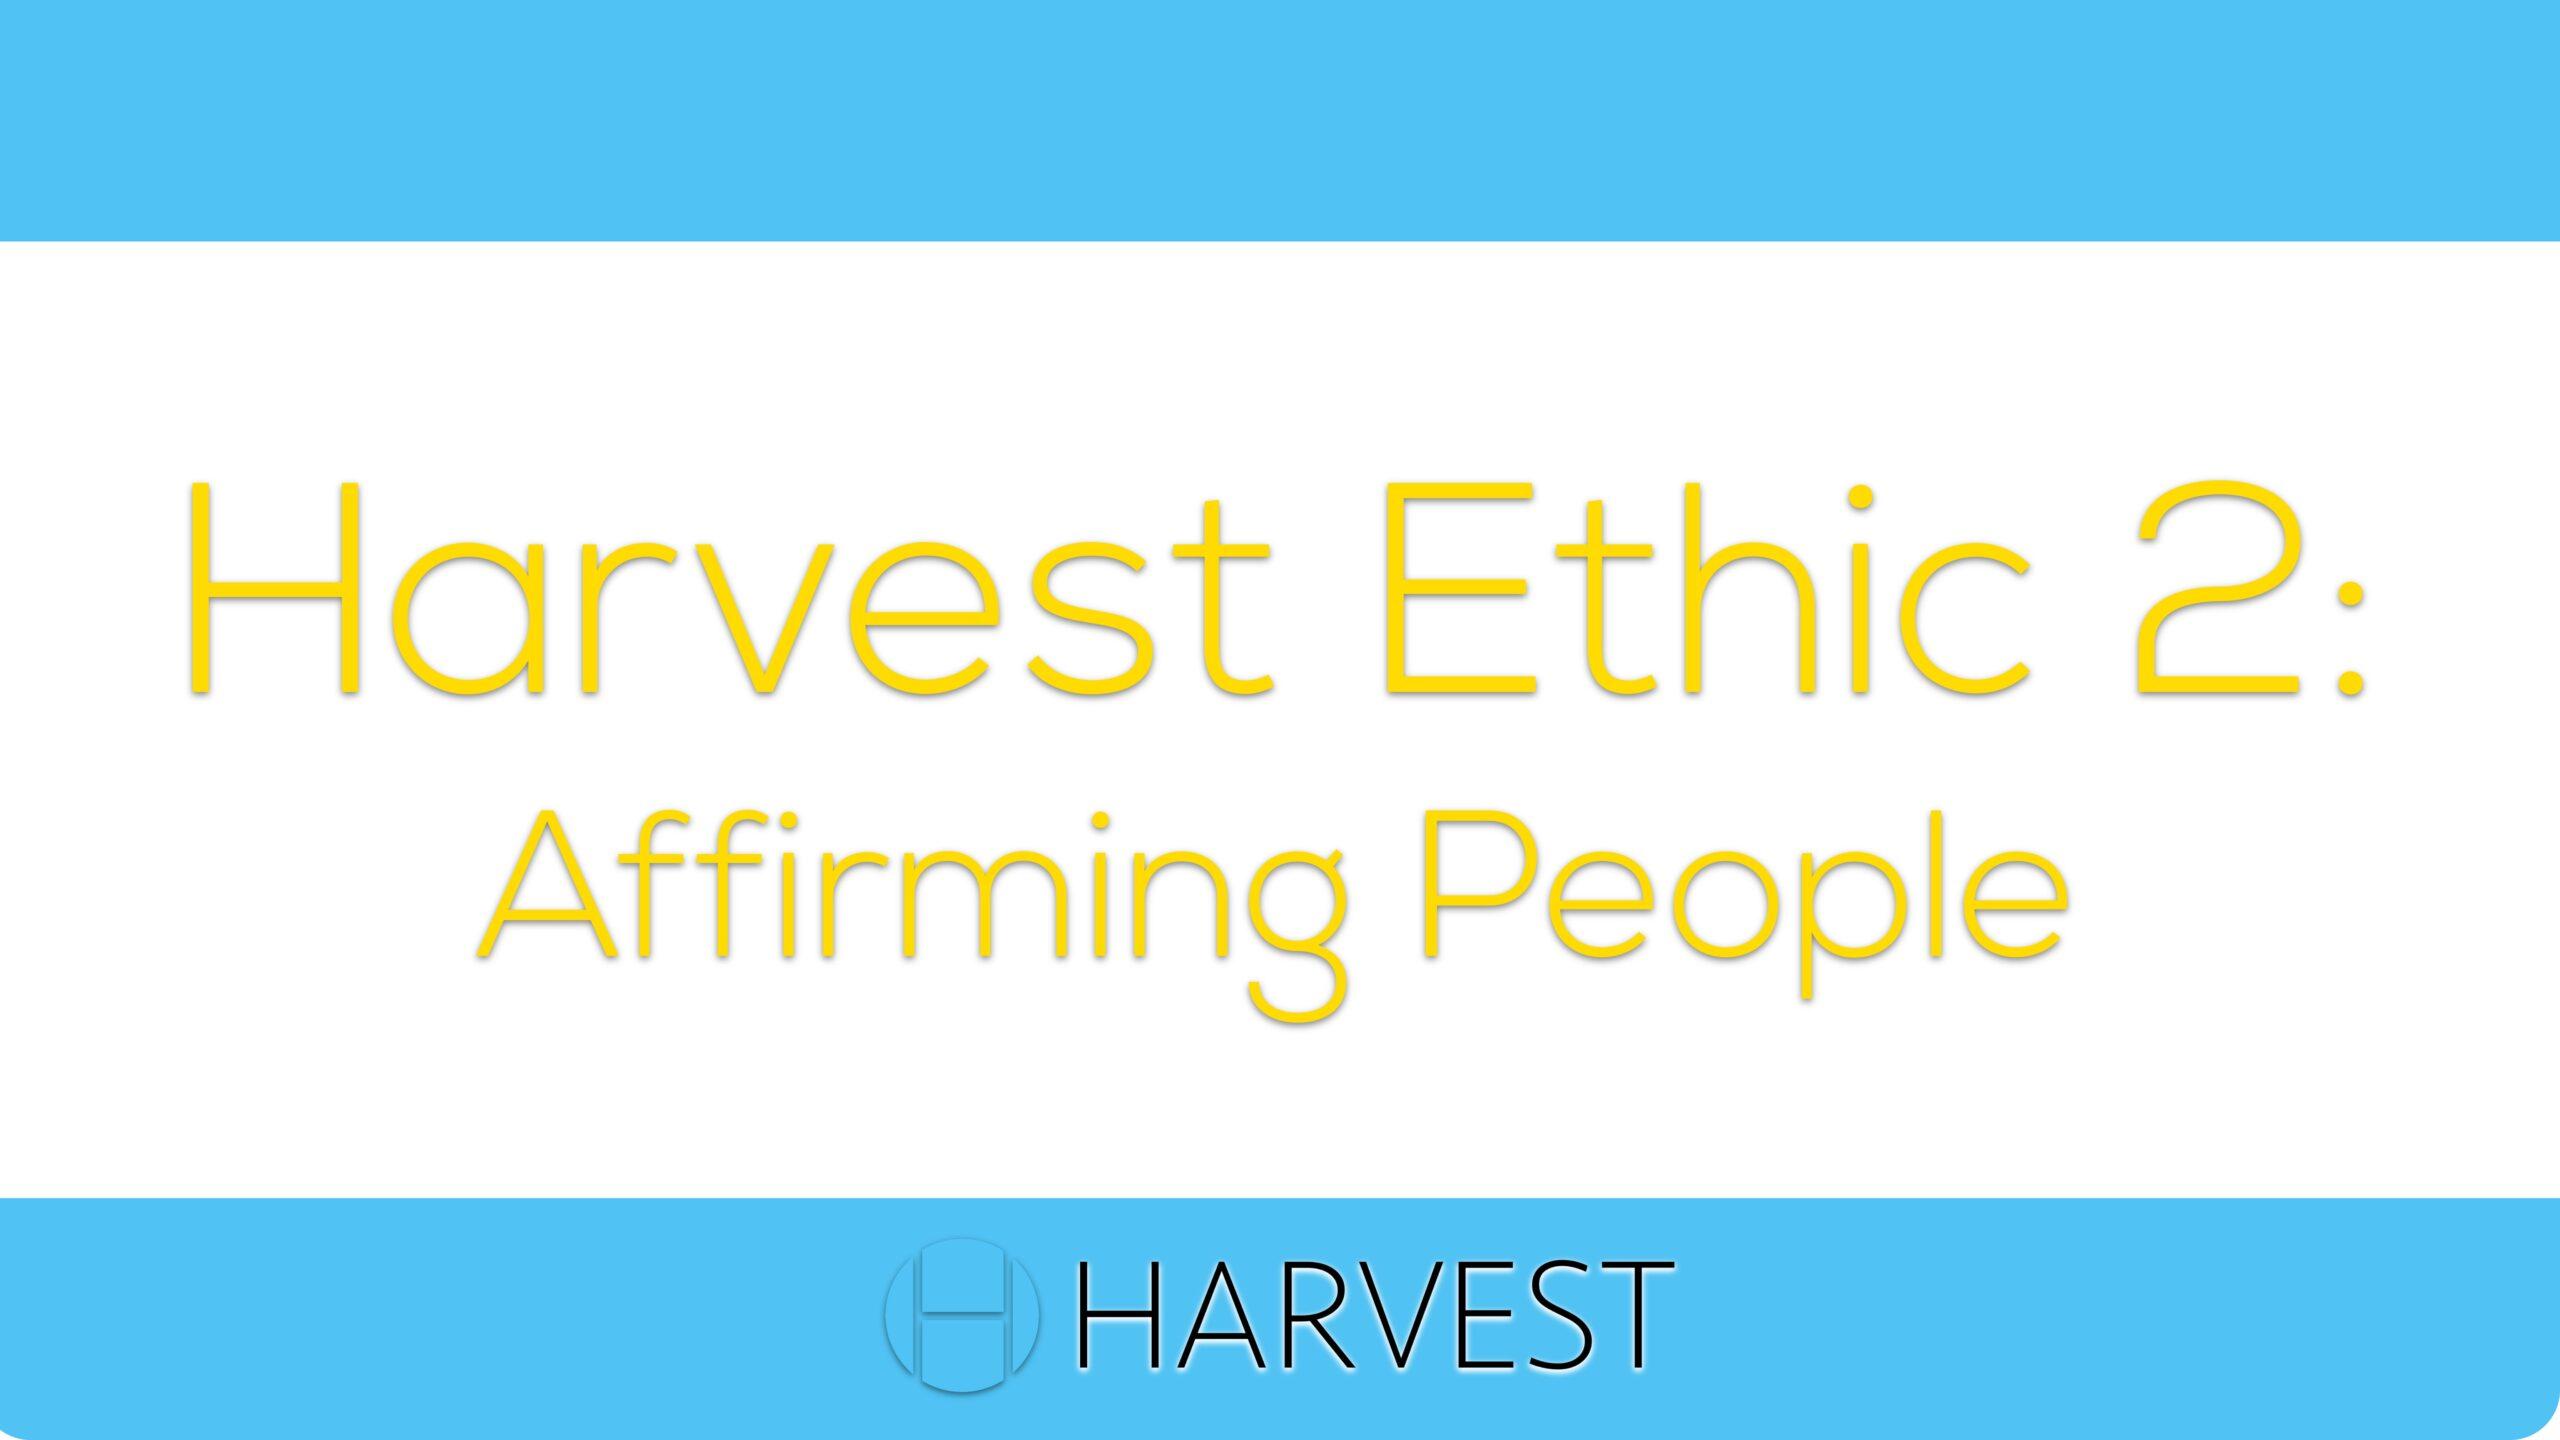 Harvest Ethic 2: Affirming People